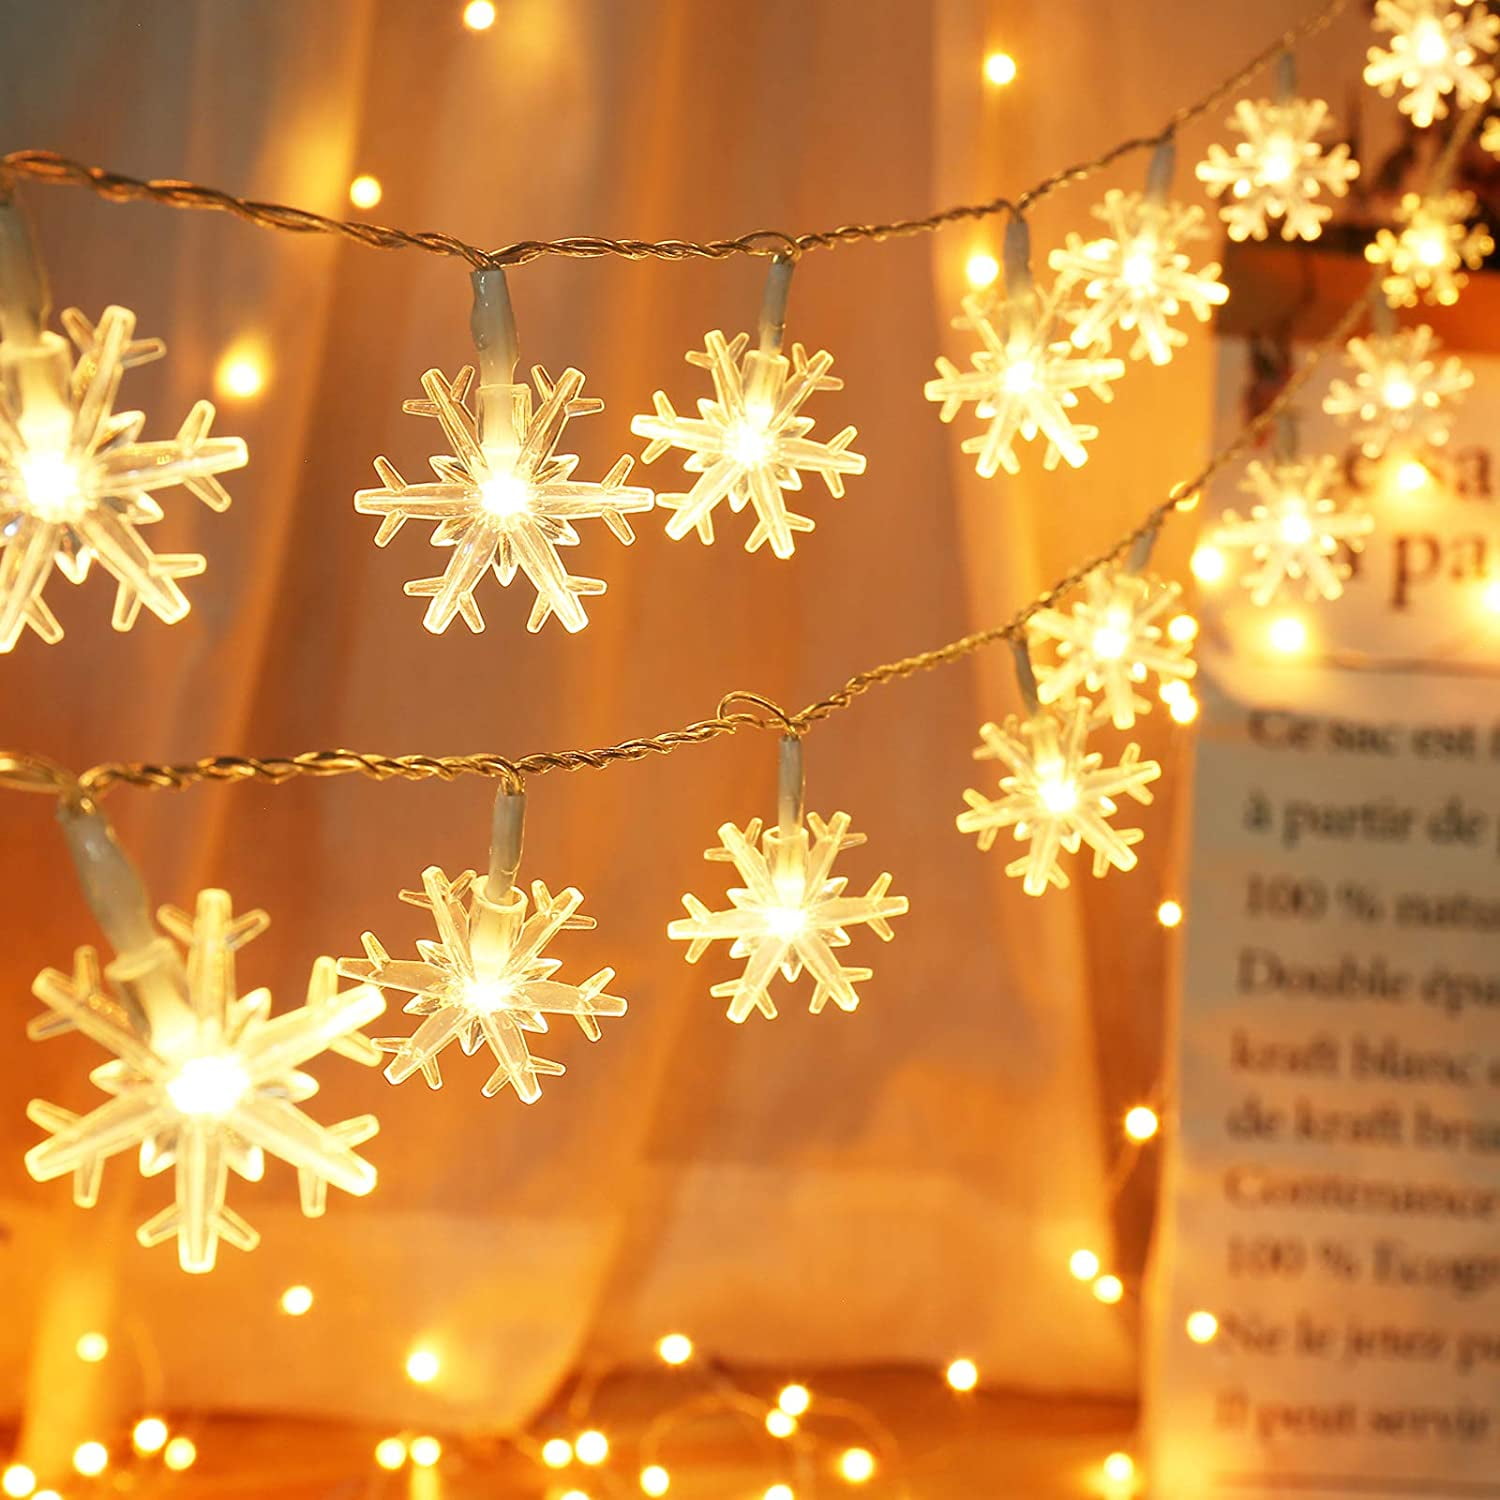 Snowflake Star Net Mesh Curtain LED Fairy Lights Wedding Xmas Garden Party Decor 